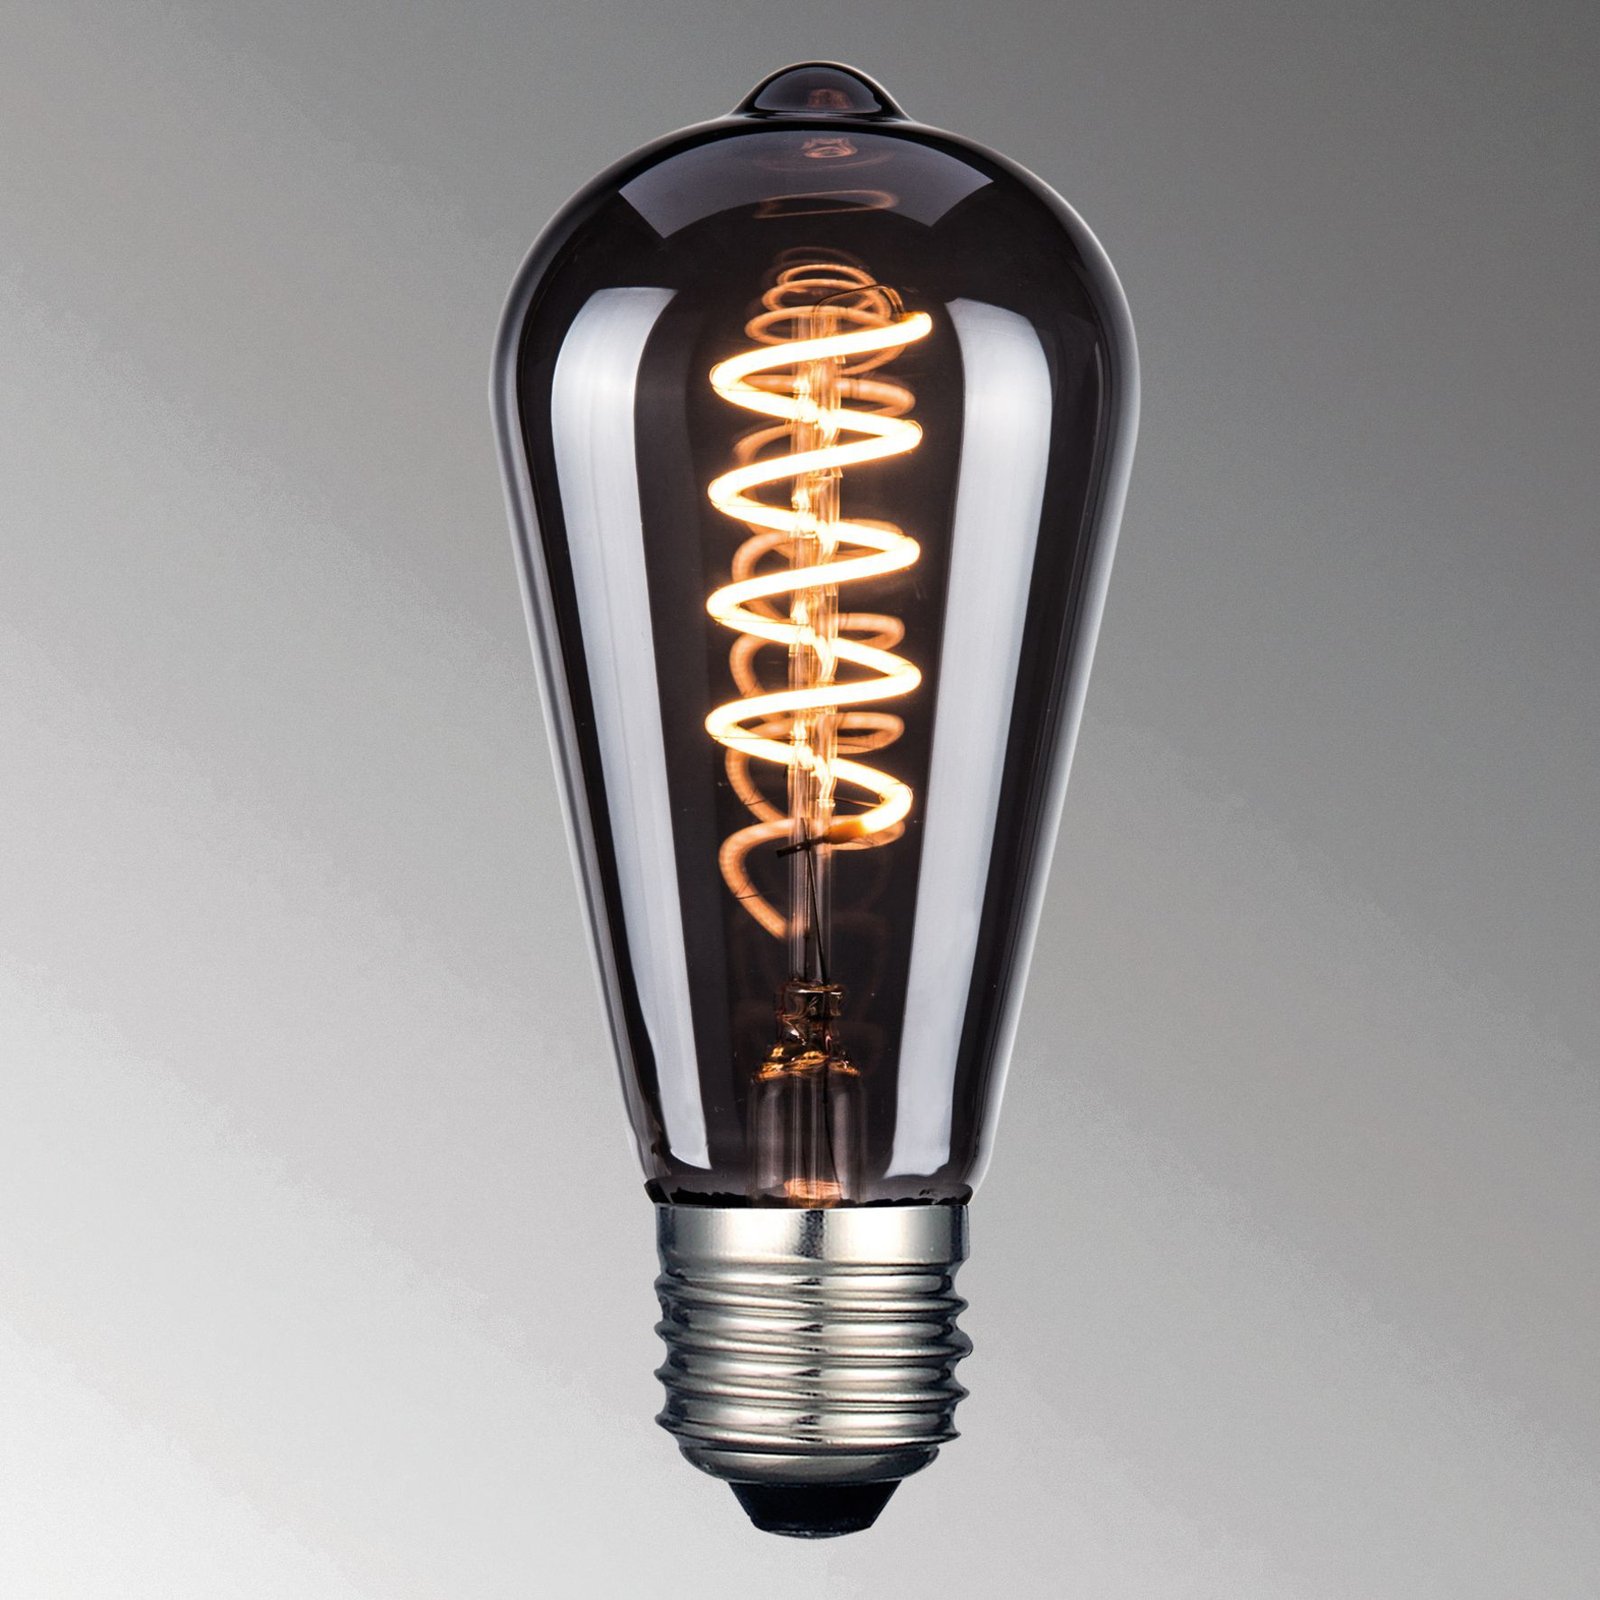 LED lamp, E27, Rustika, rookkleurig, 4 W, 1800 K